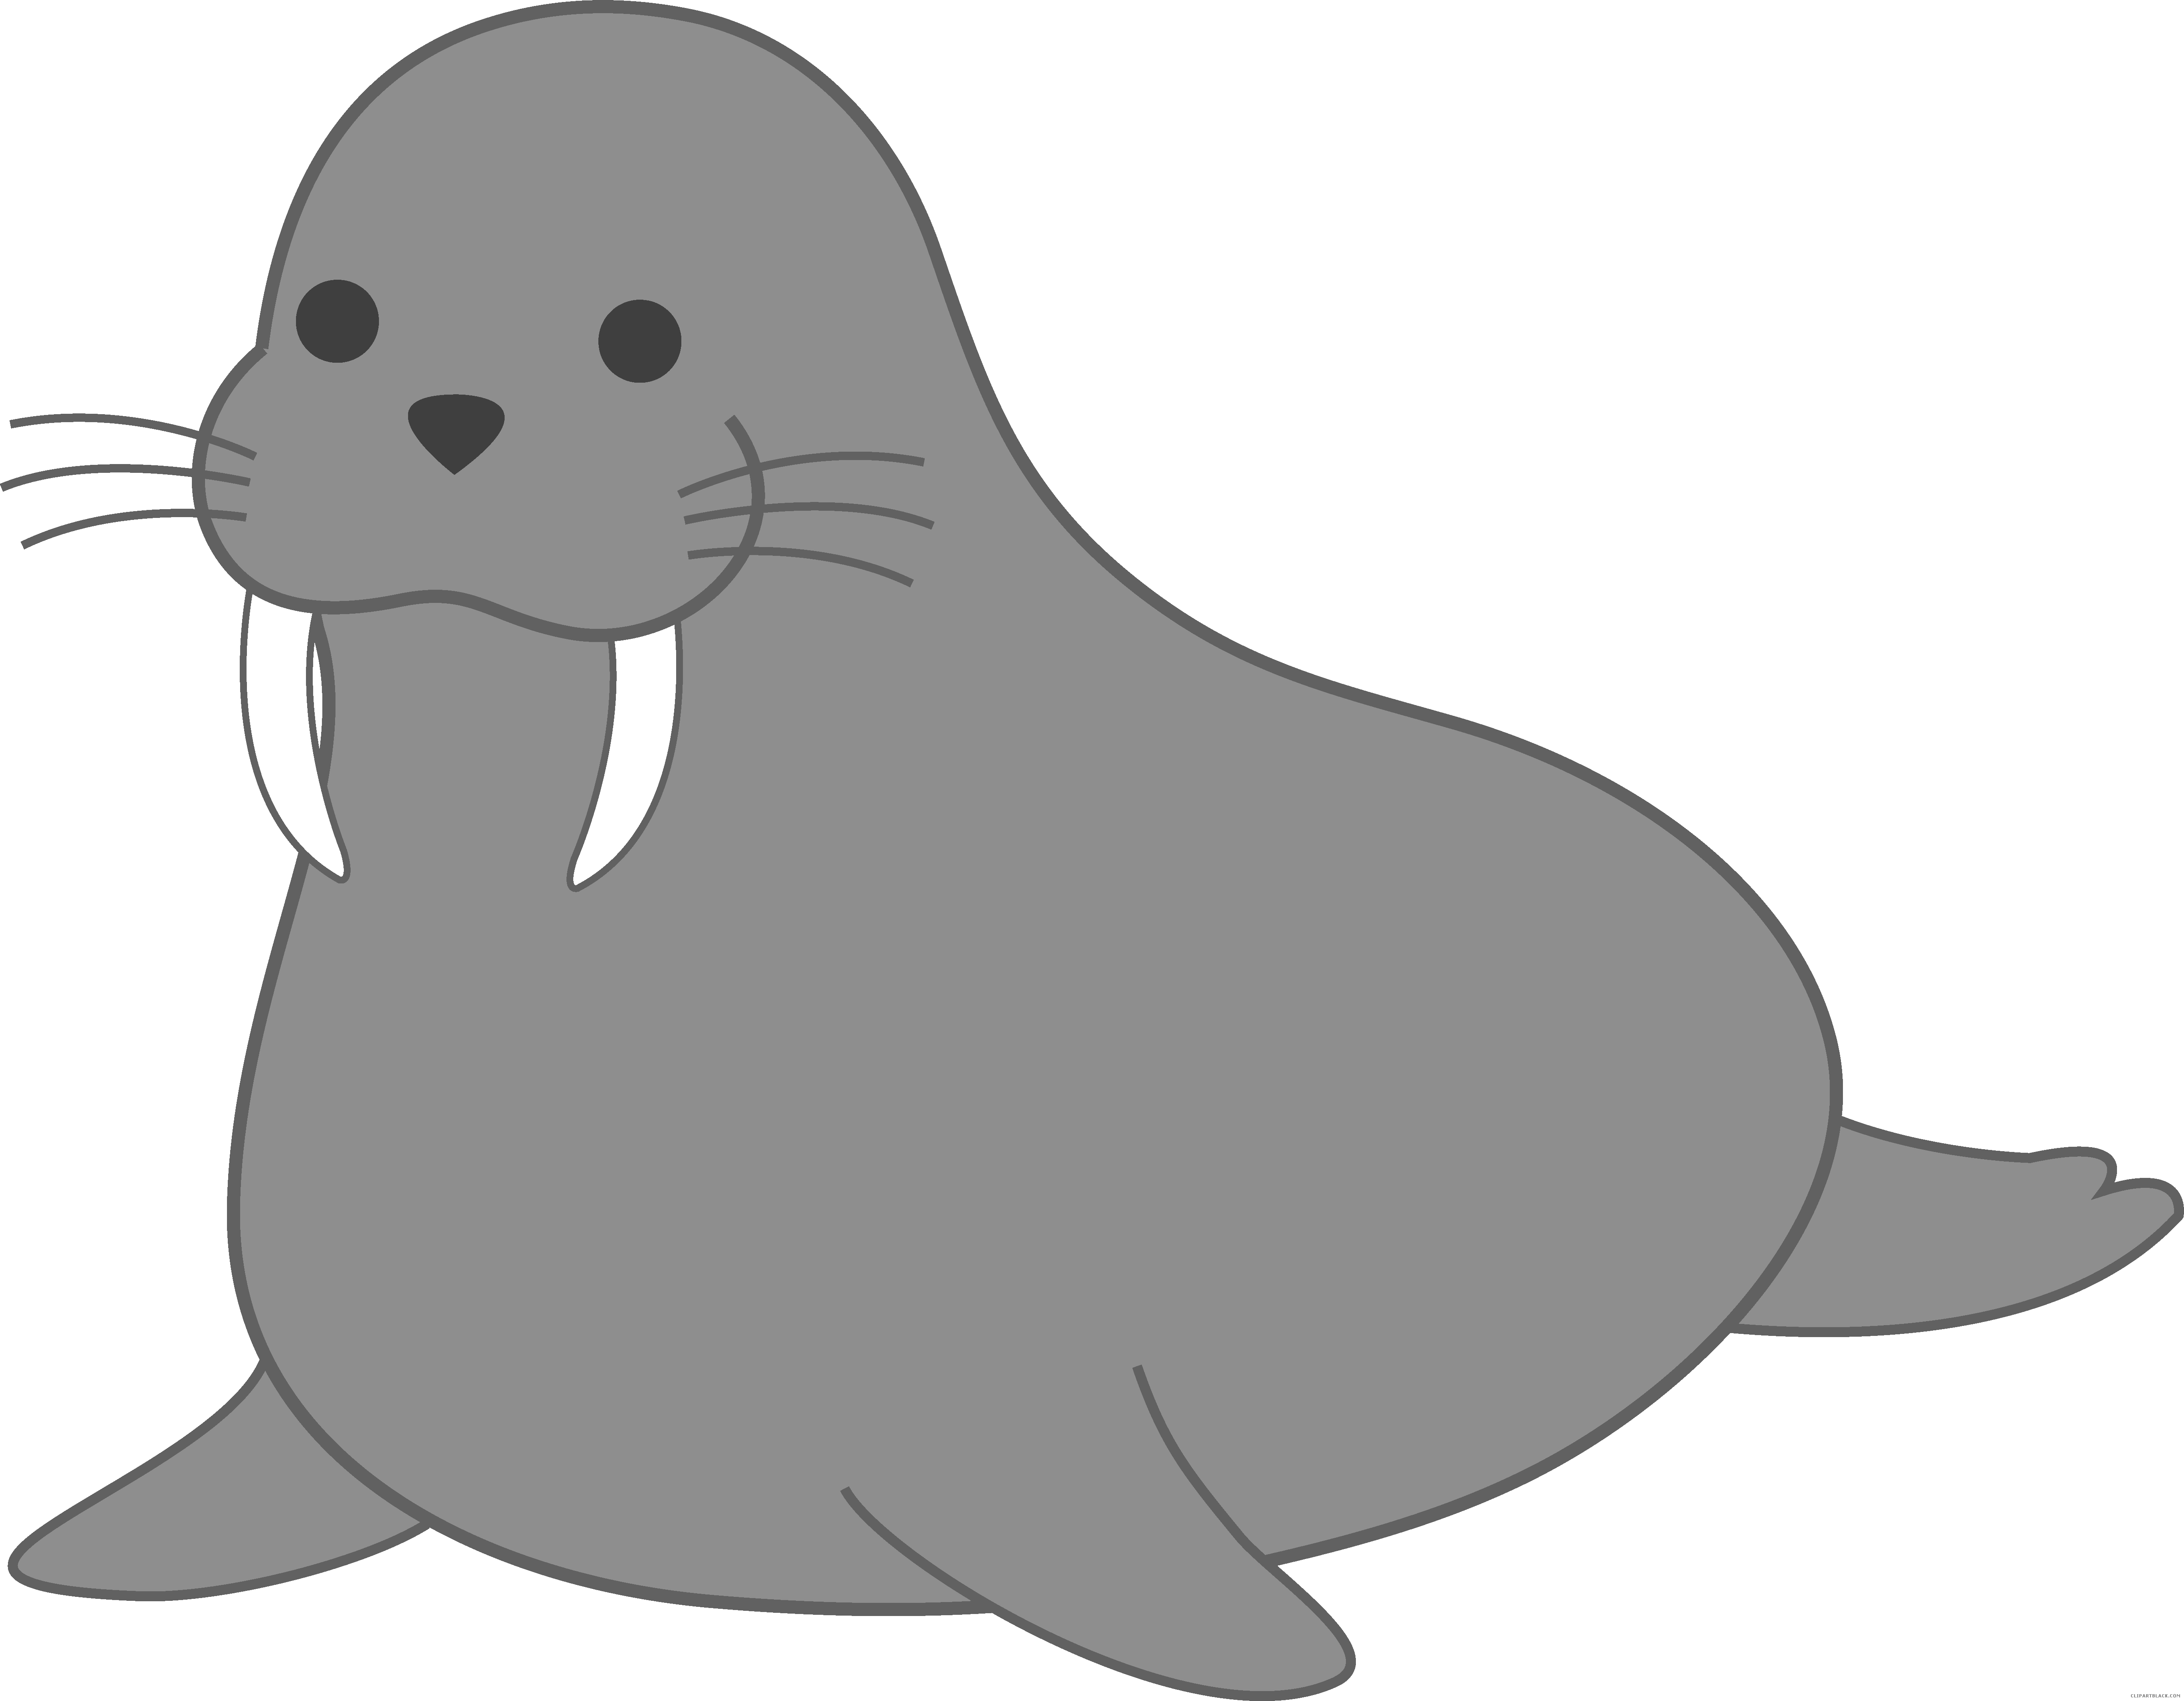 Walrus earless seal.